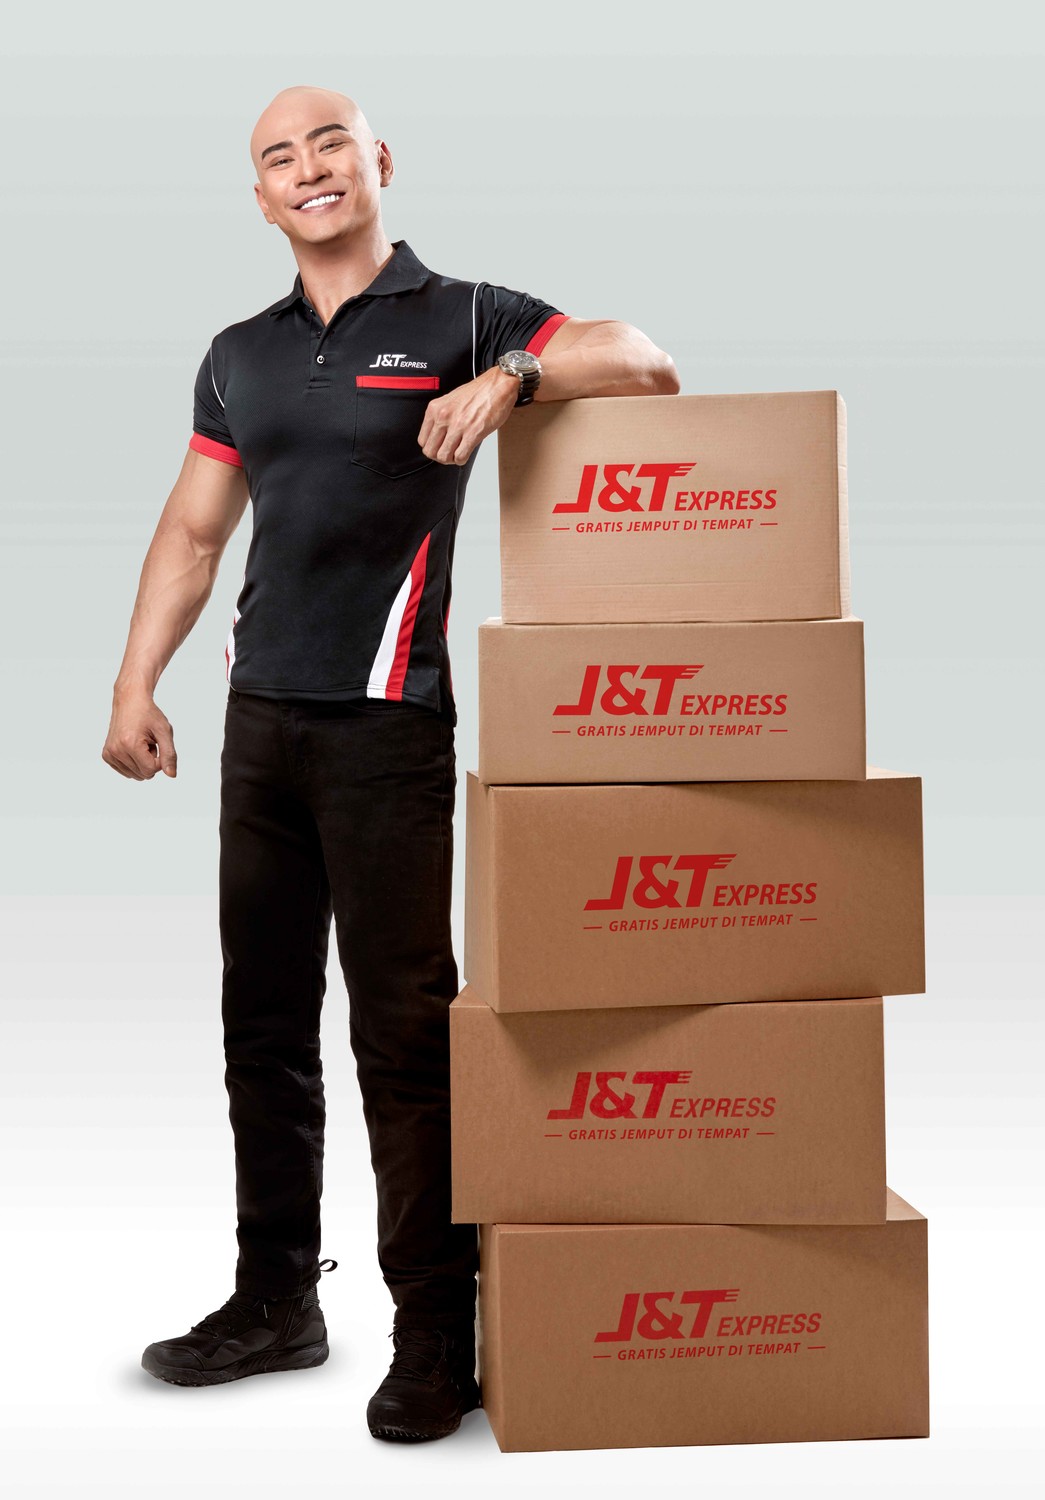 J&t customer service malaysia